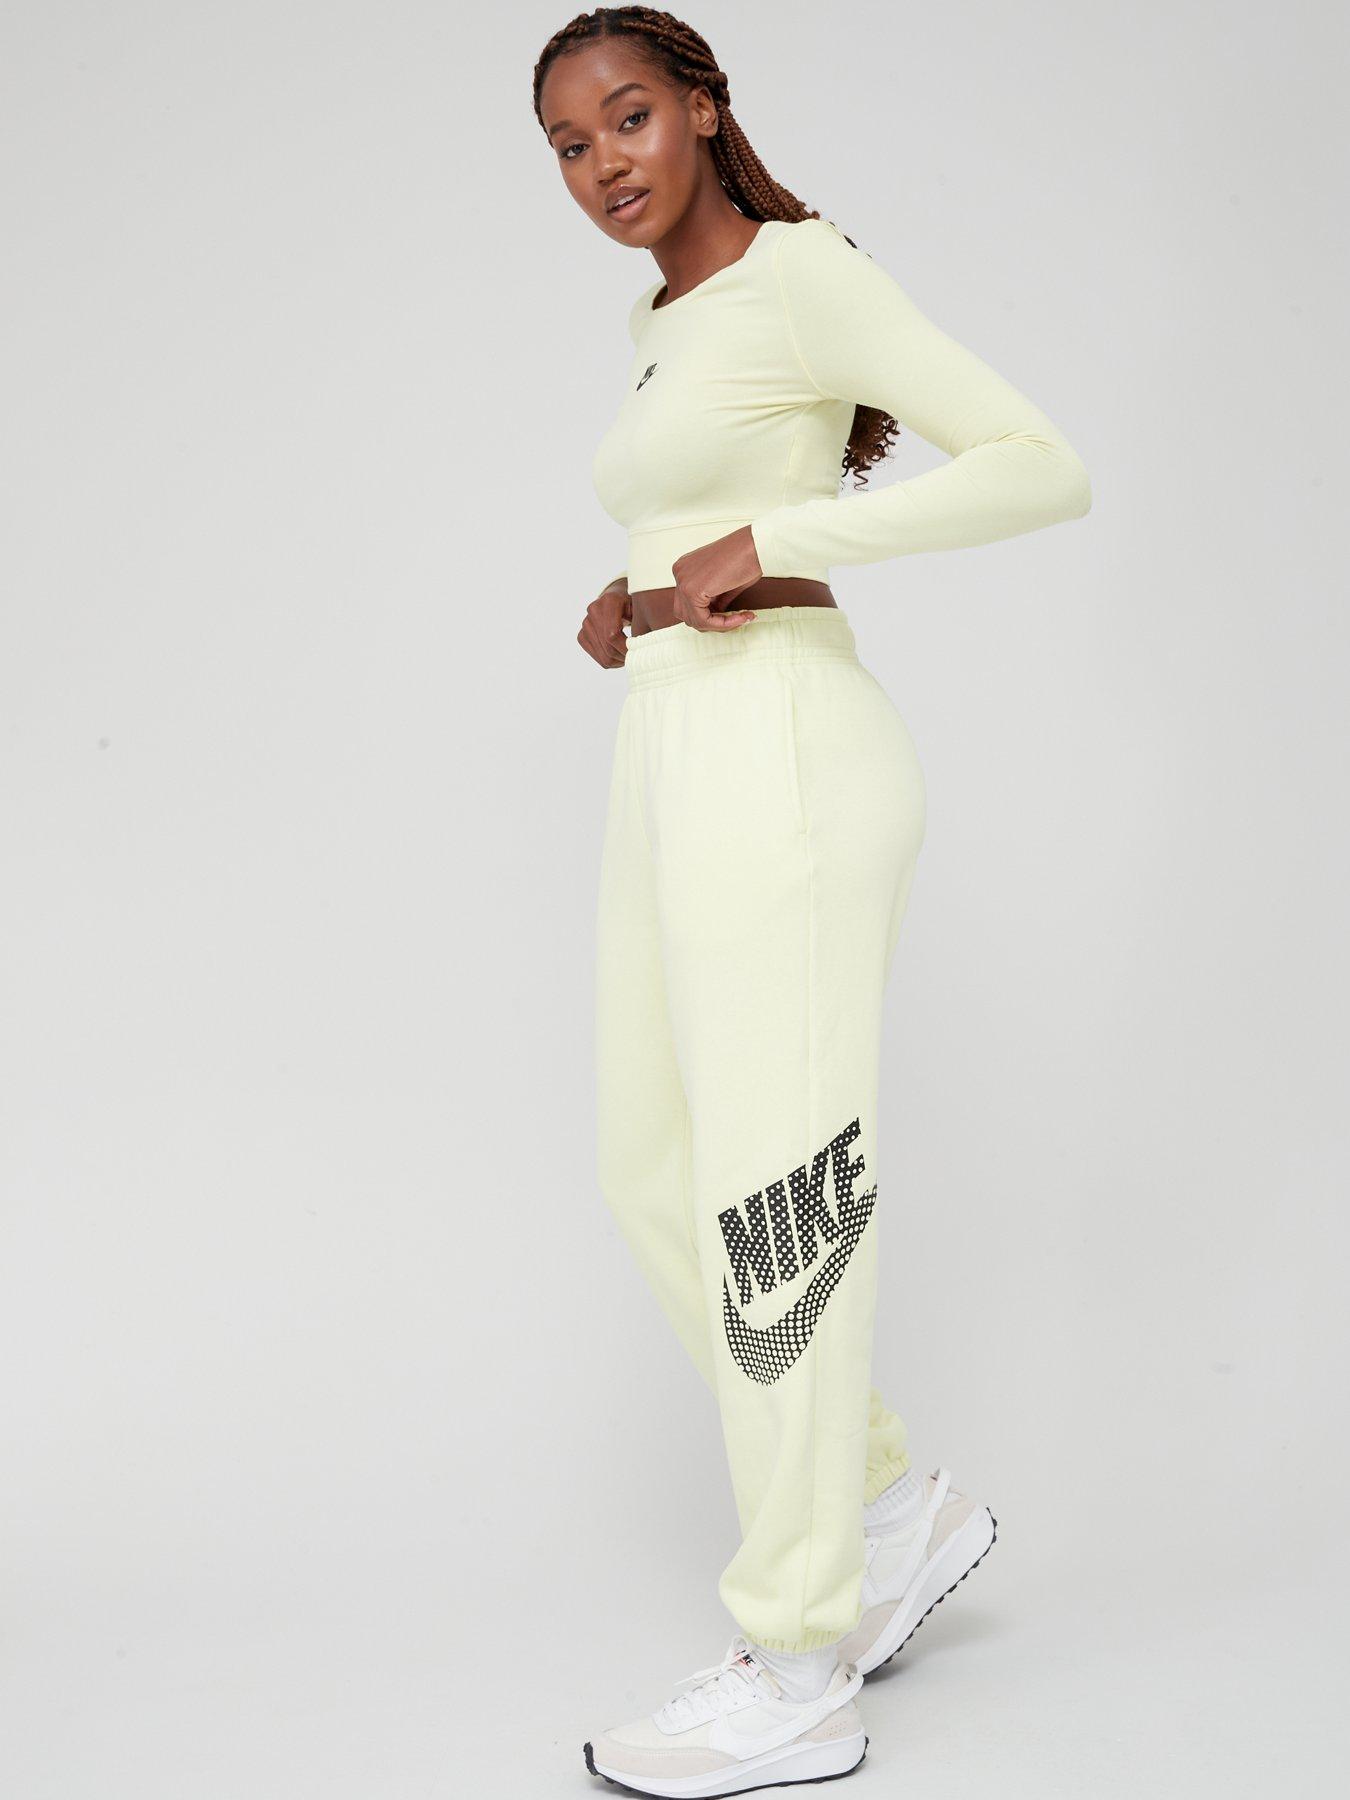 M, Nike, Trousers & leggings, Women